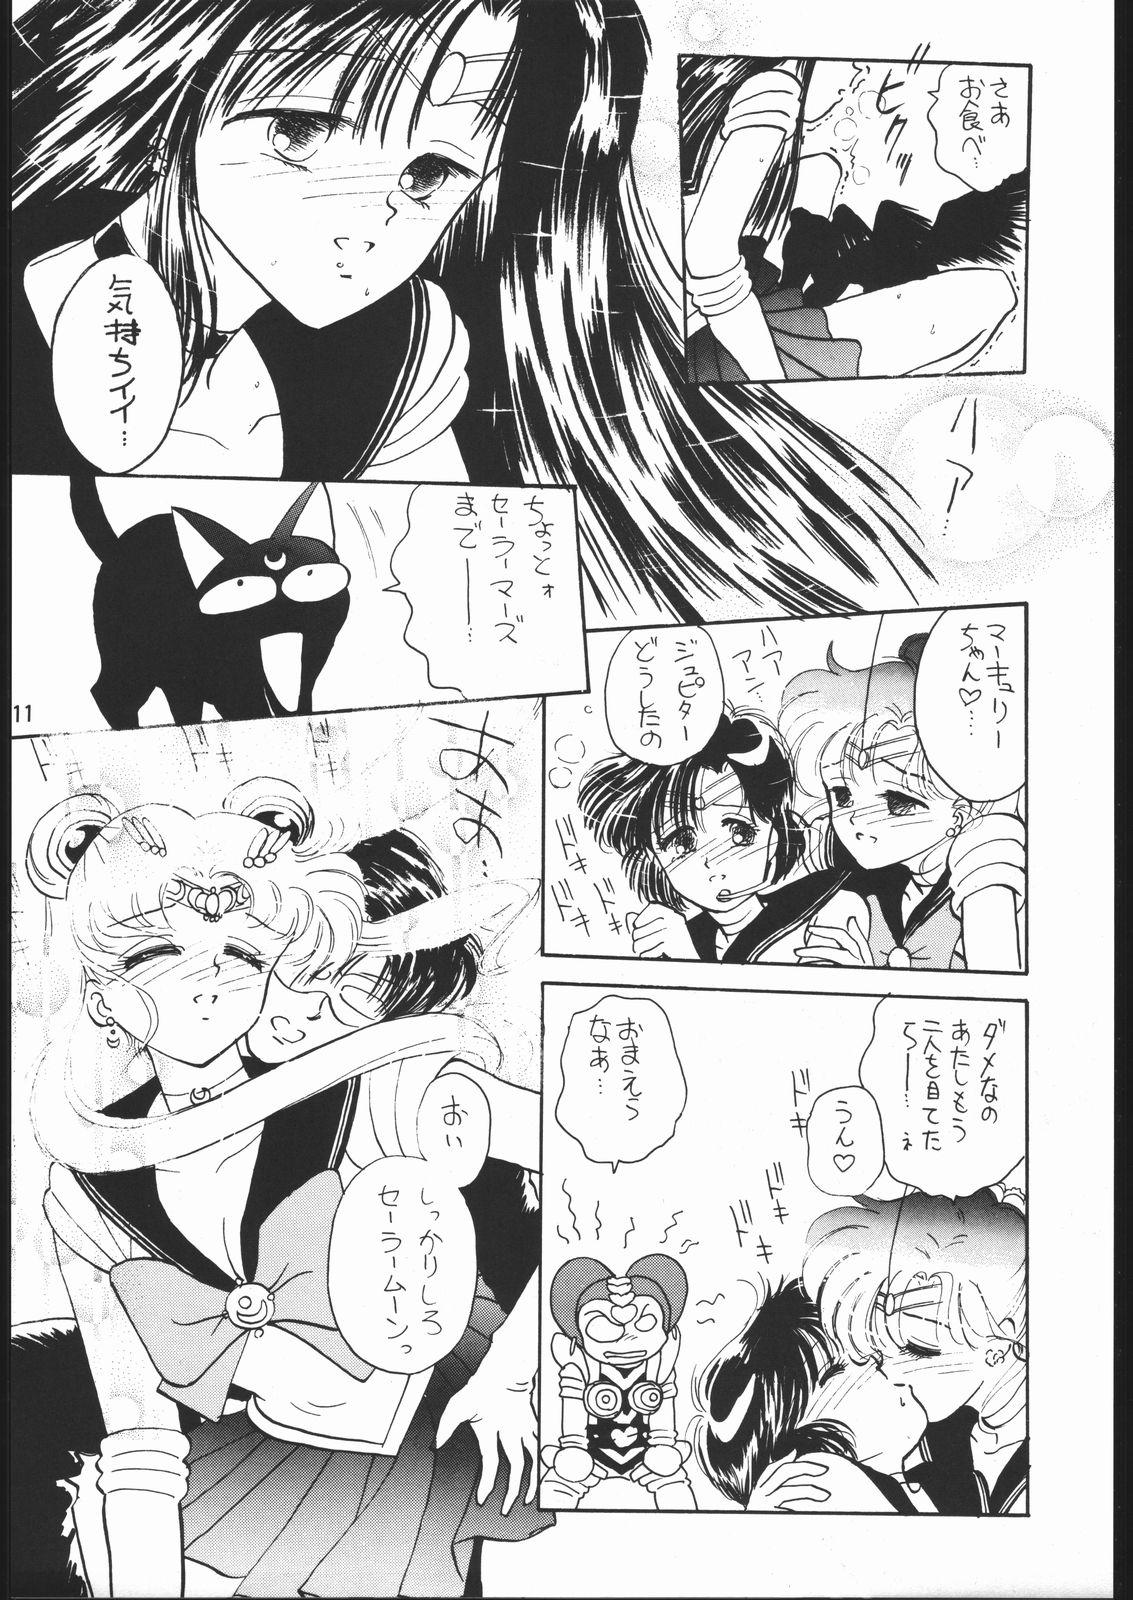 Women うさぎがピョン!! - Sailor moon Chibola - Page 10